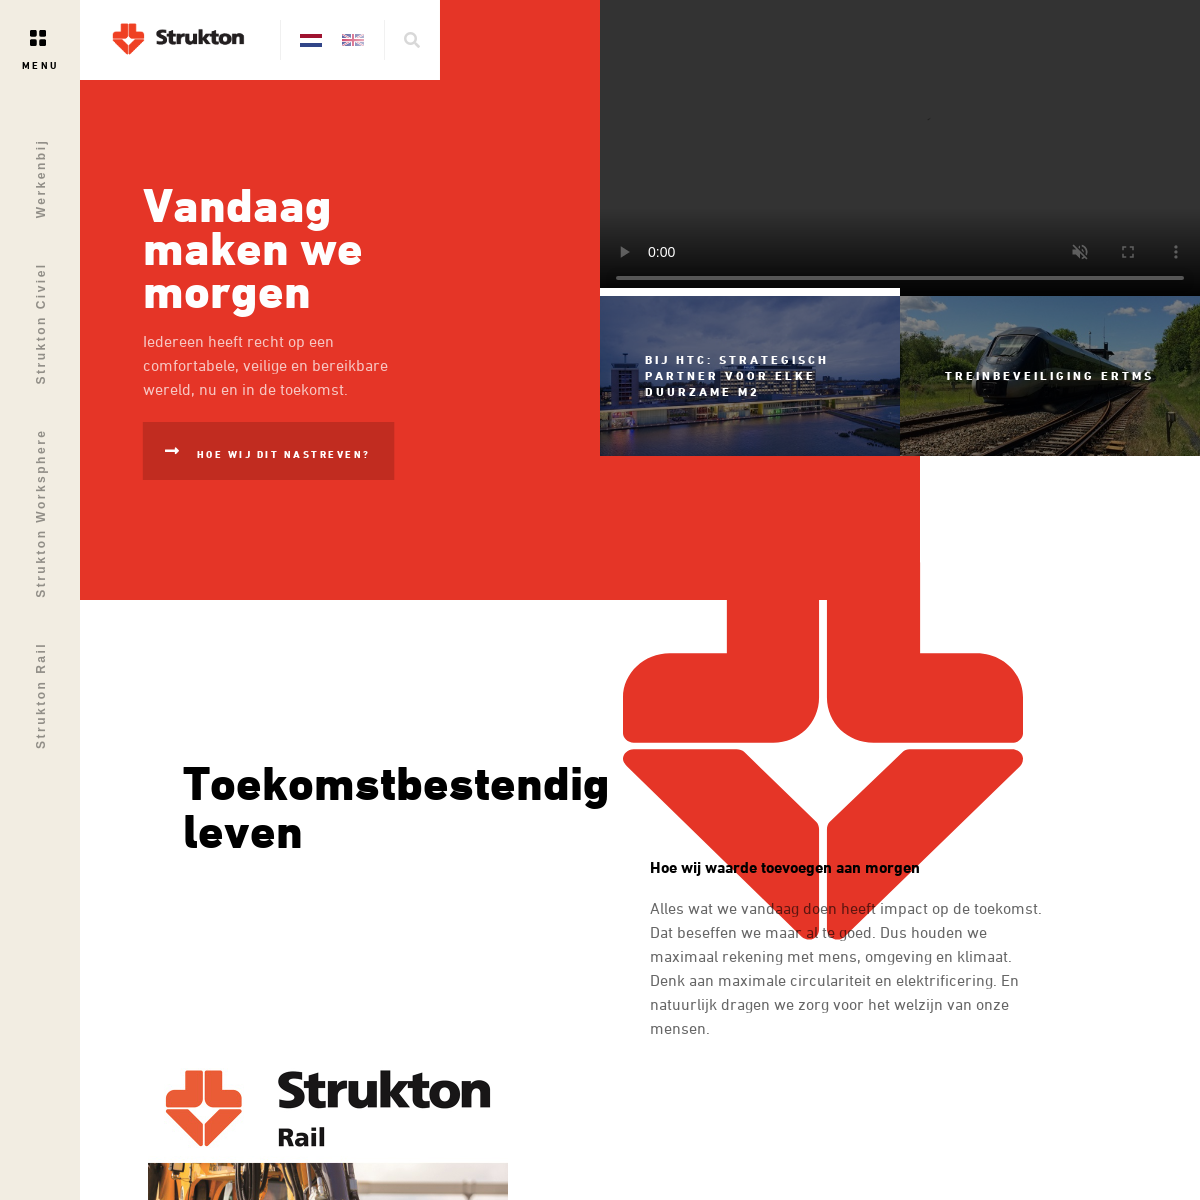 A complete backup of strukton.nl